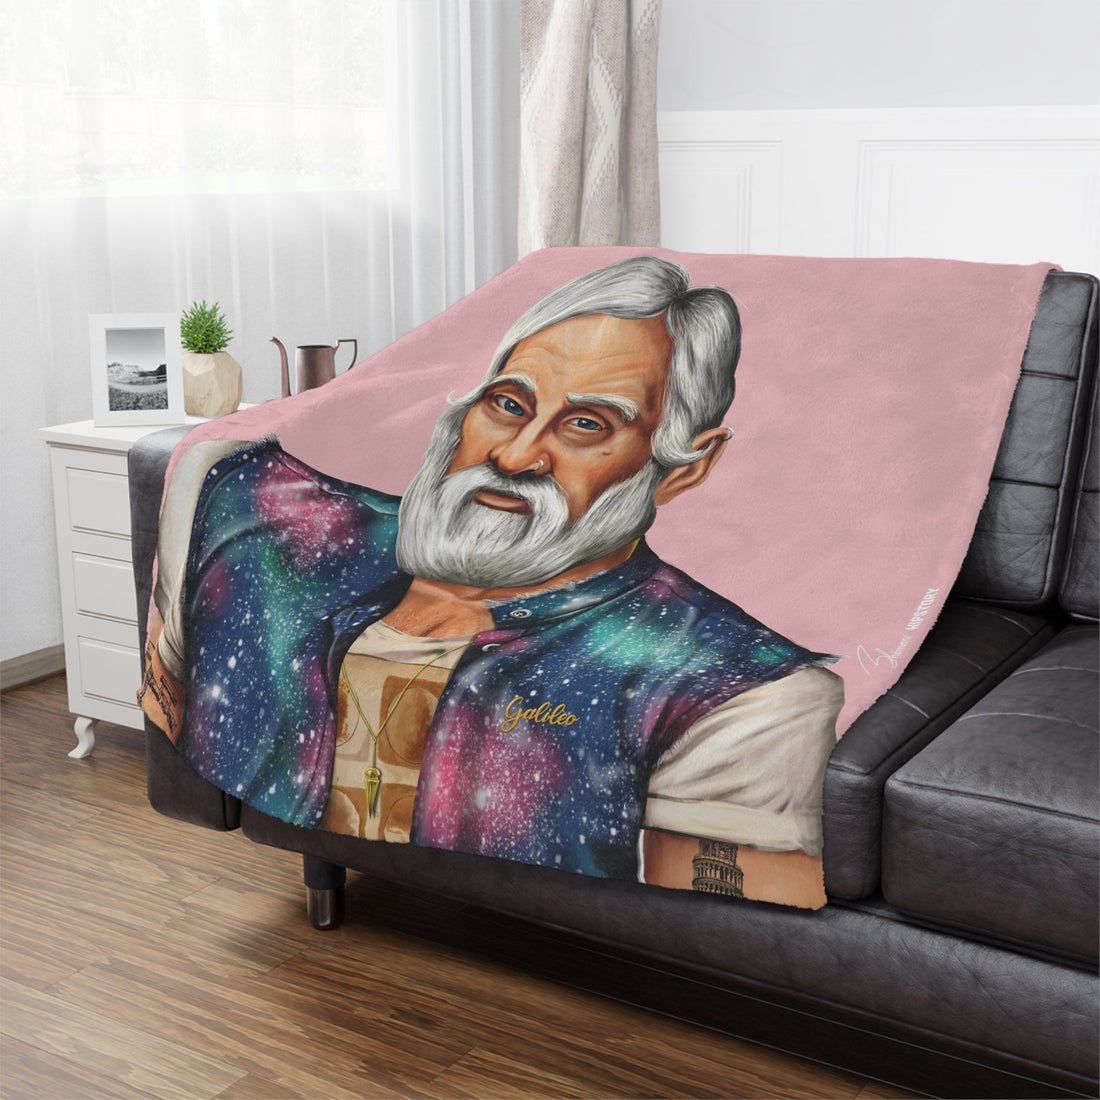 Galileo Galilei Minky Blanket - Hipstory Shop